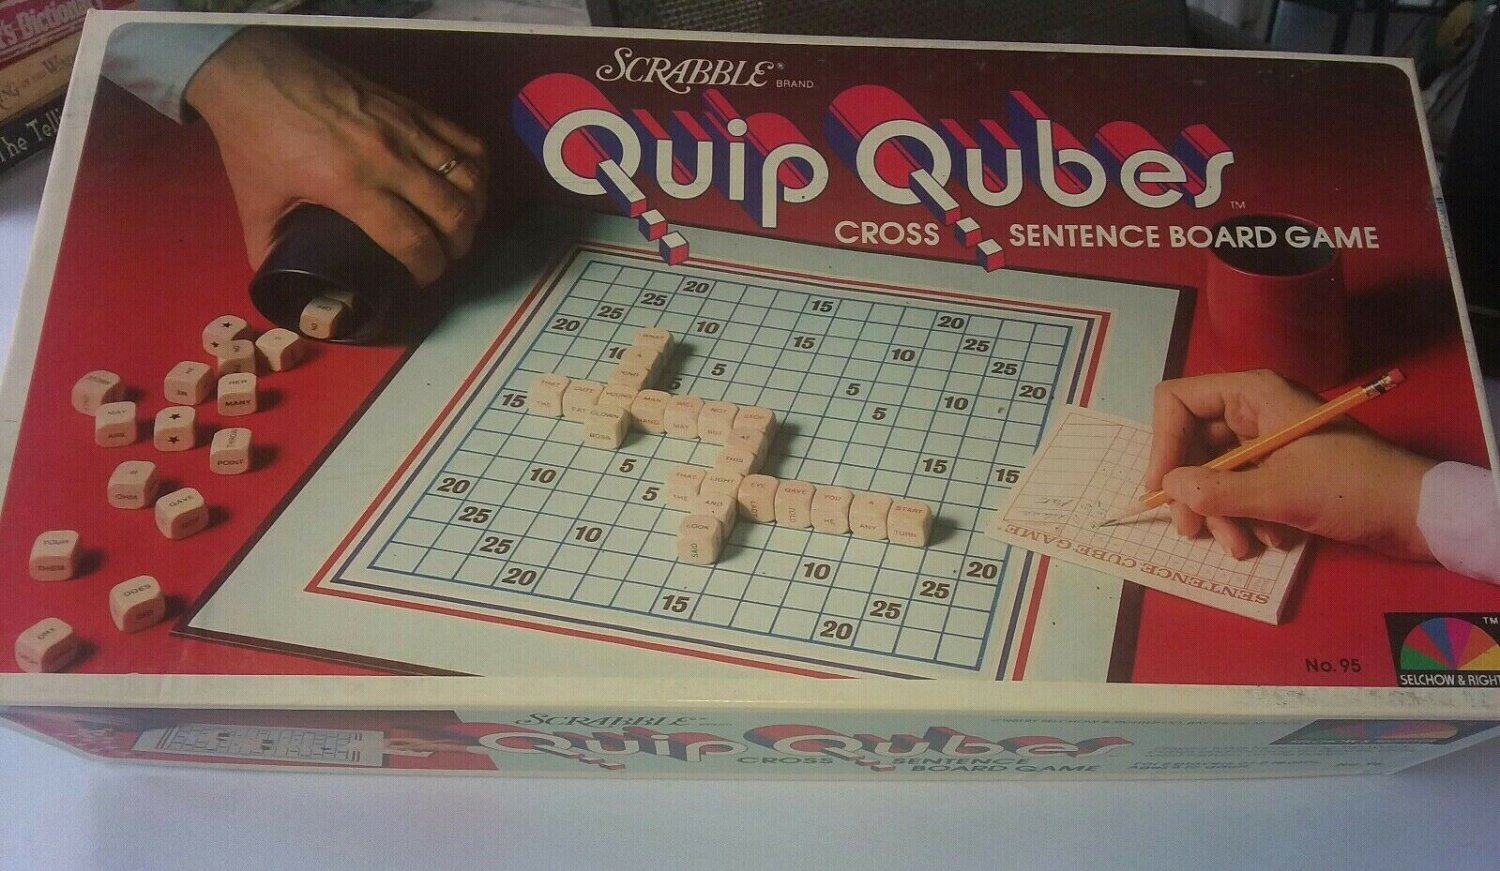 1981 Scrabble Quip Qubes Word Game Crossword Sentence BoardGame Complete Vintage